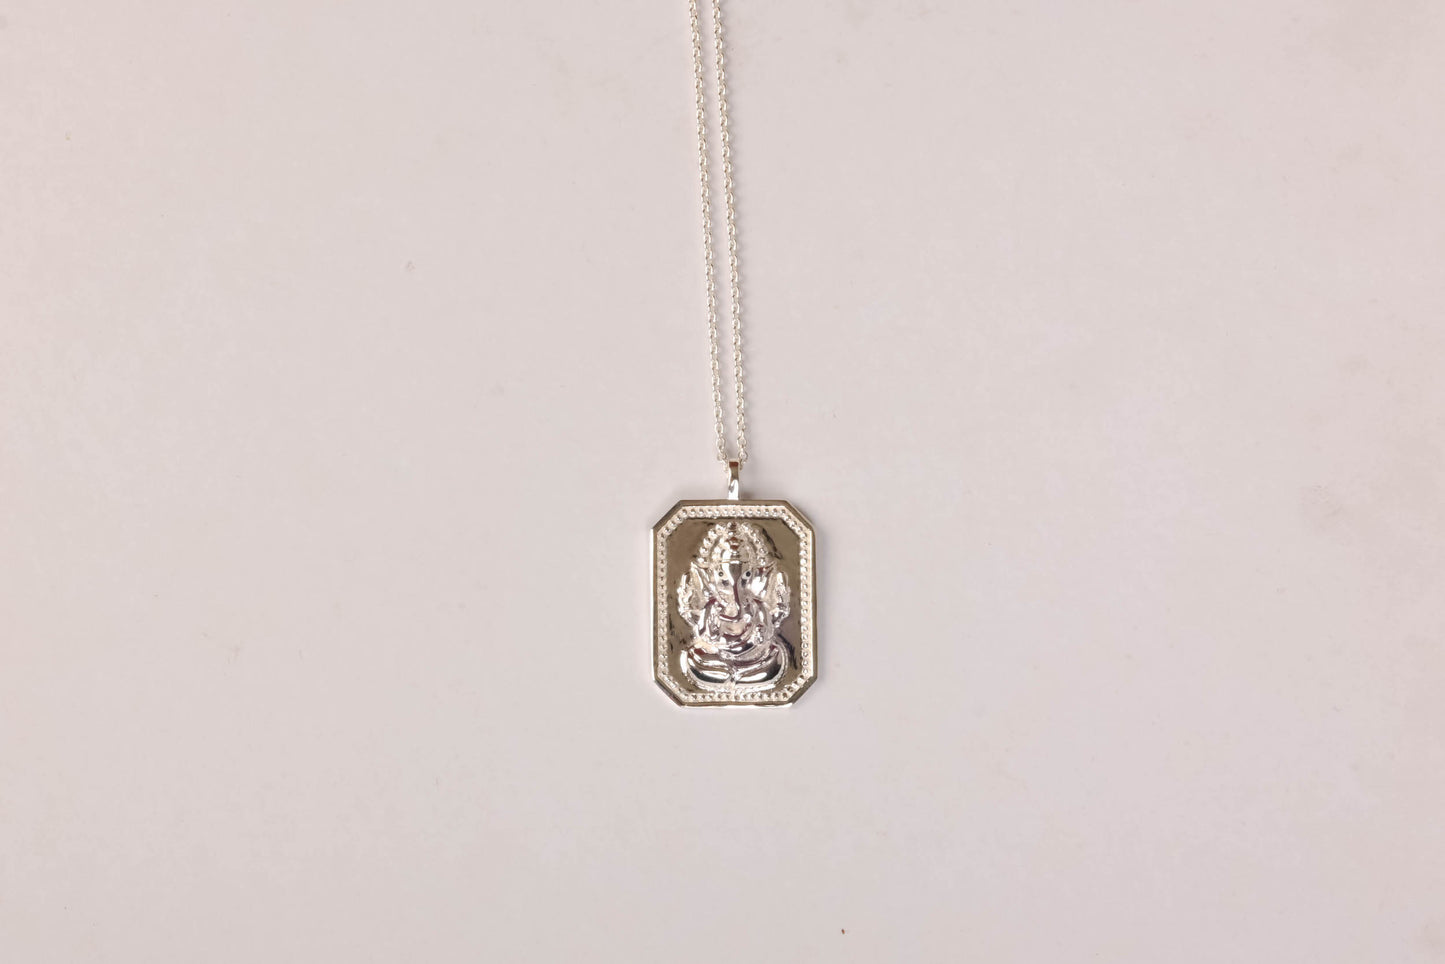 Vakratunda Ganesha Silver Pendant with Chain